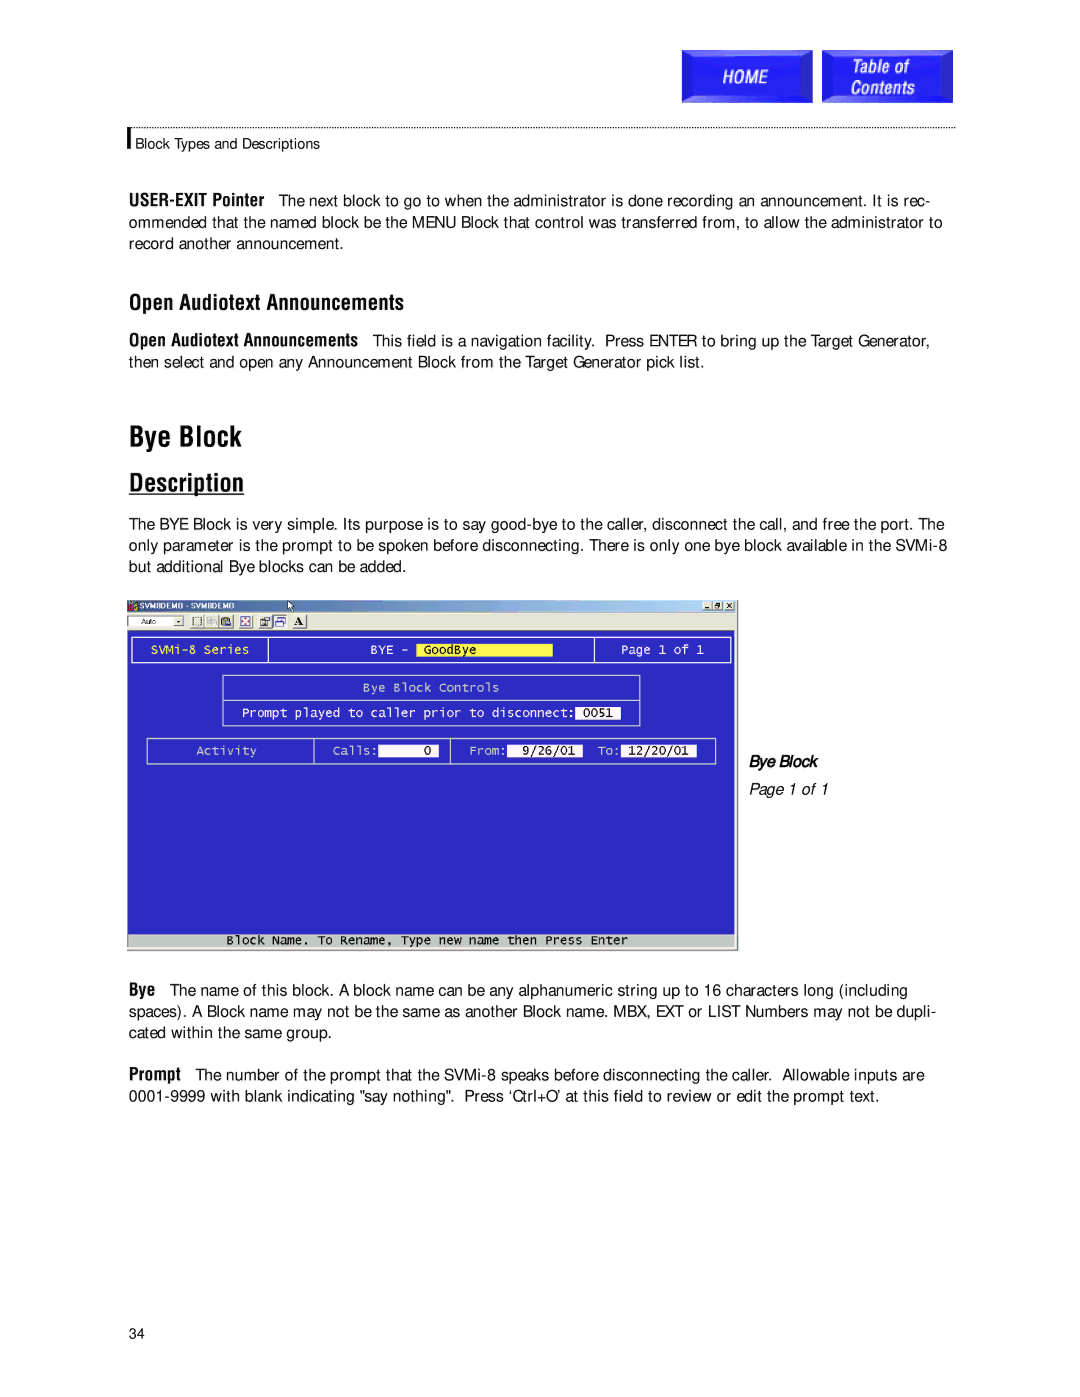 Samsung SVMi-8 technical manual Bye Block, Open Audiotext Announcements 